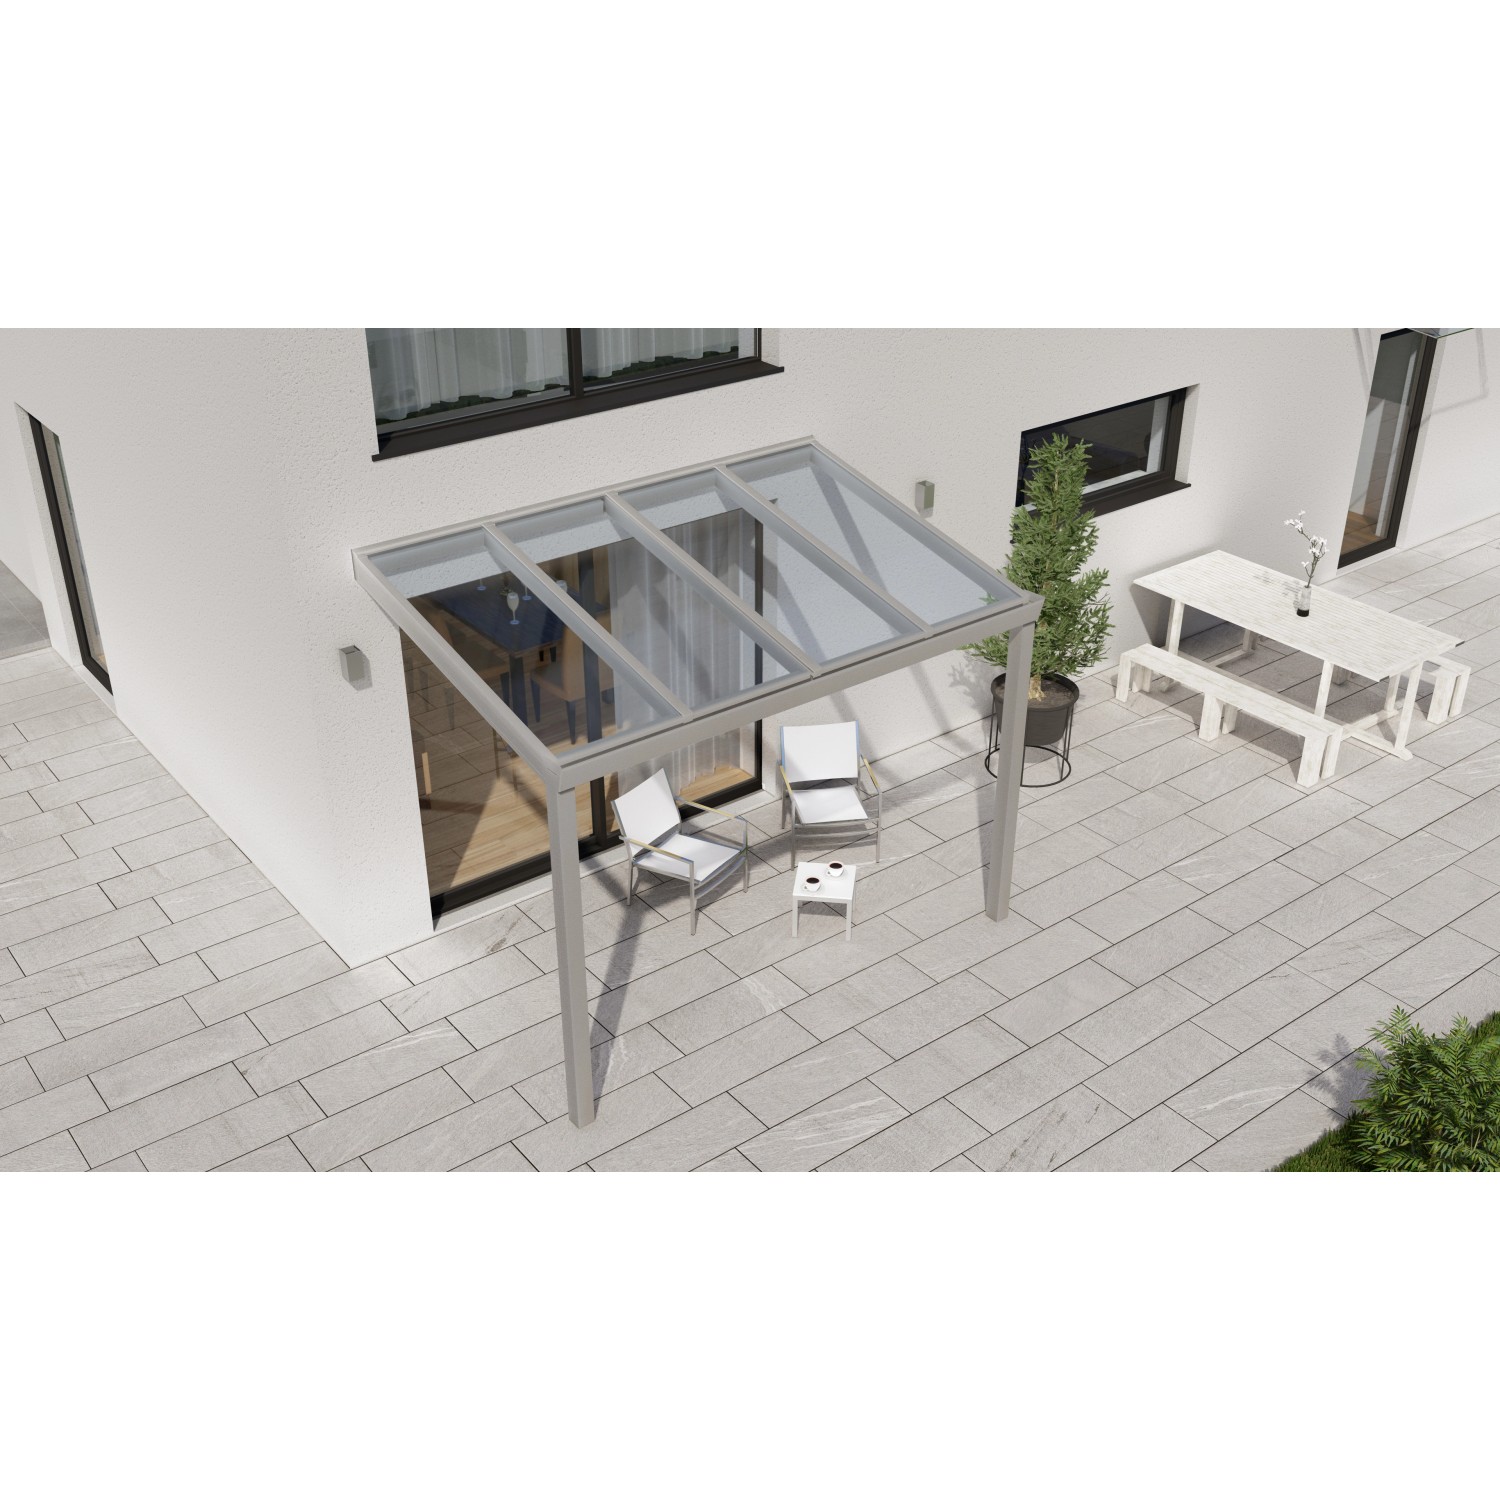 Terrassenüberdachung Professional 300 cm x 200 cm Grau Struktur Glas